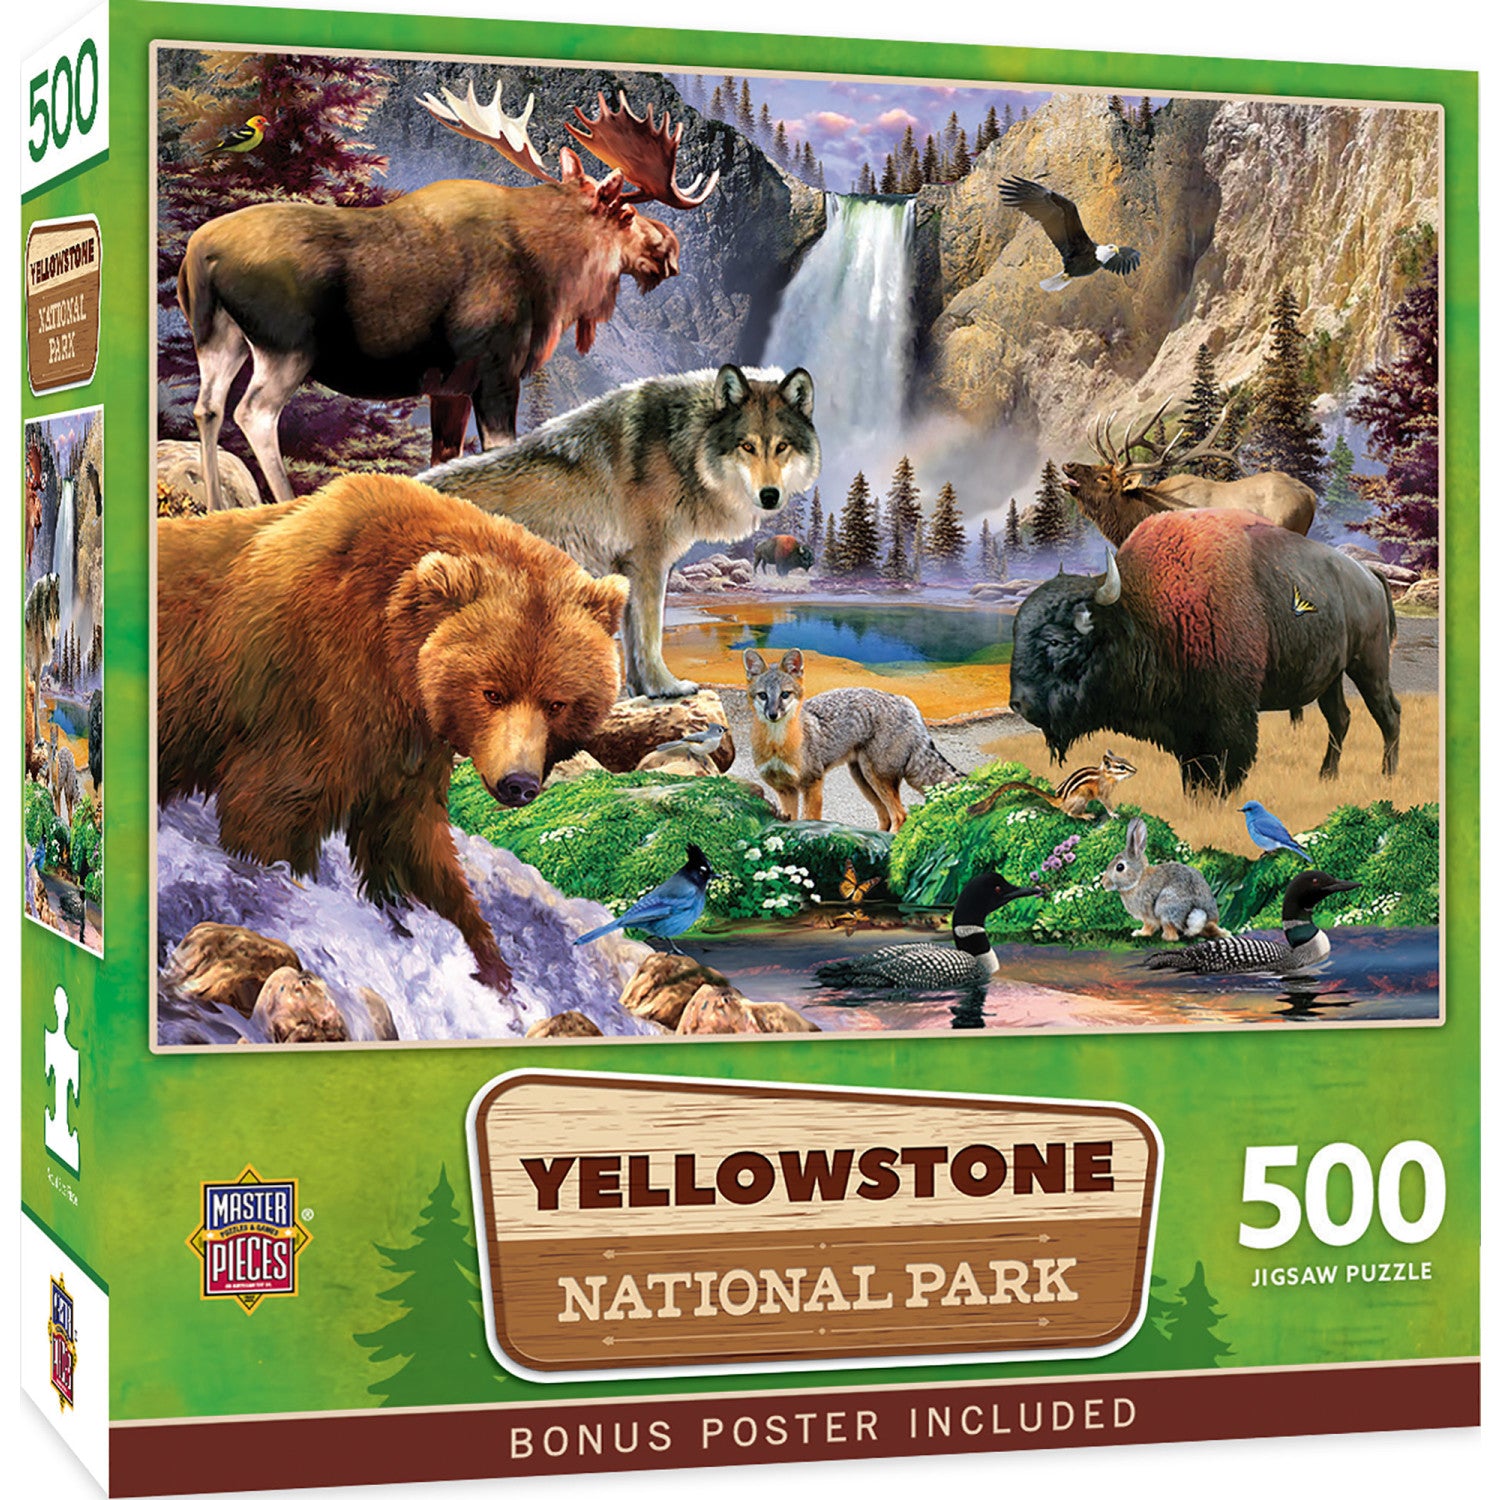 Yellowstone National Park 500 Piece Jigsaw Puzzle